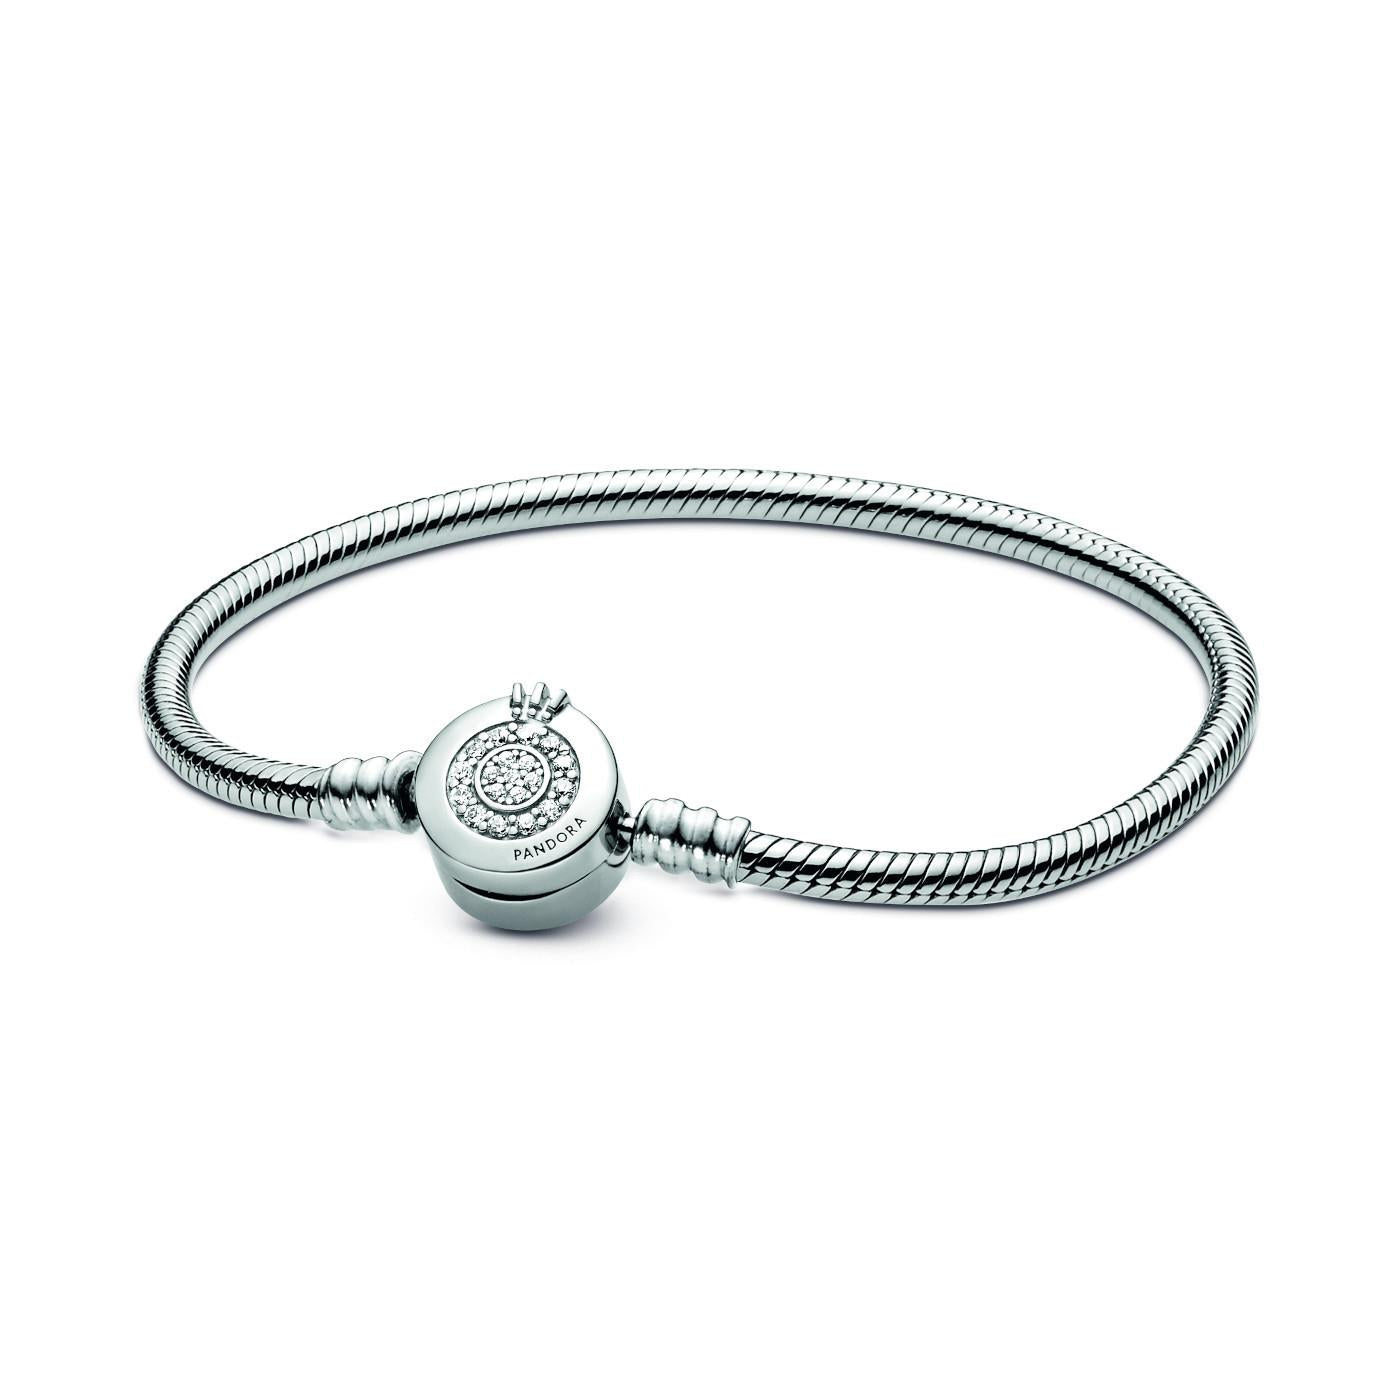 Pandora Snake chain sterling silver bracelet 17 cm